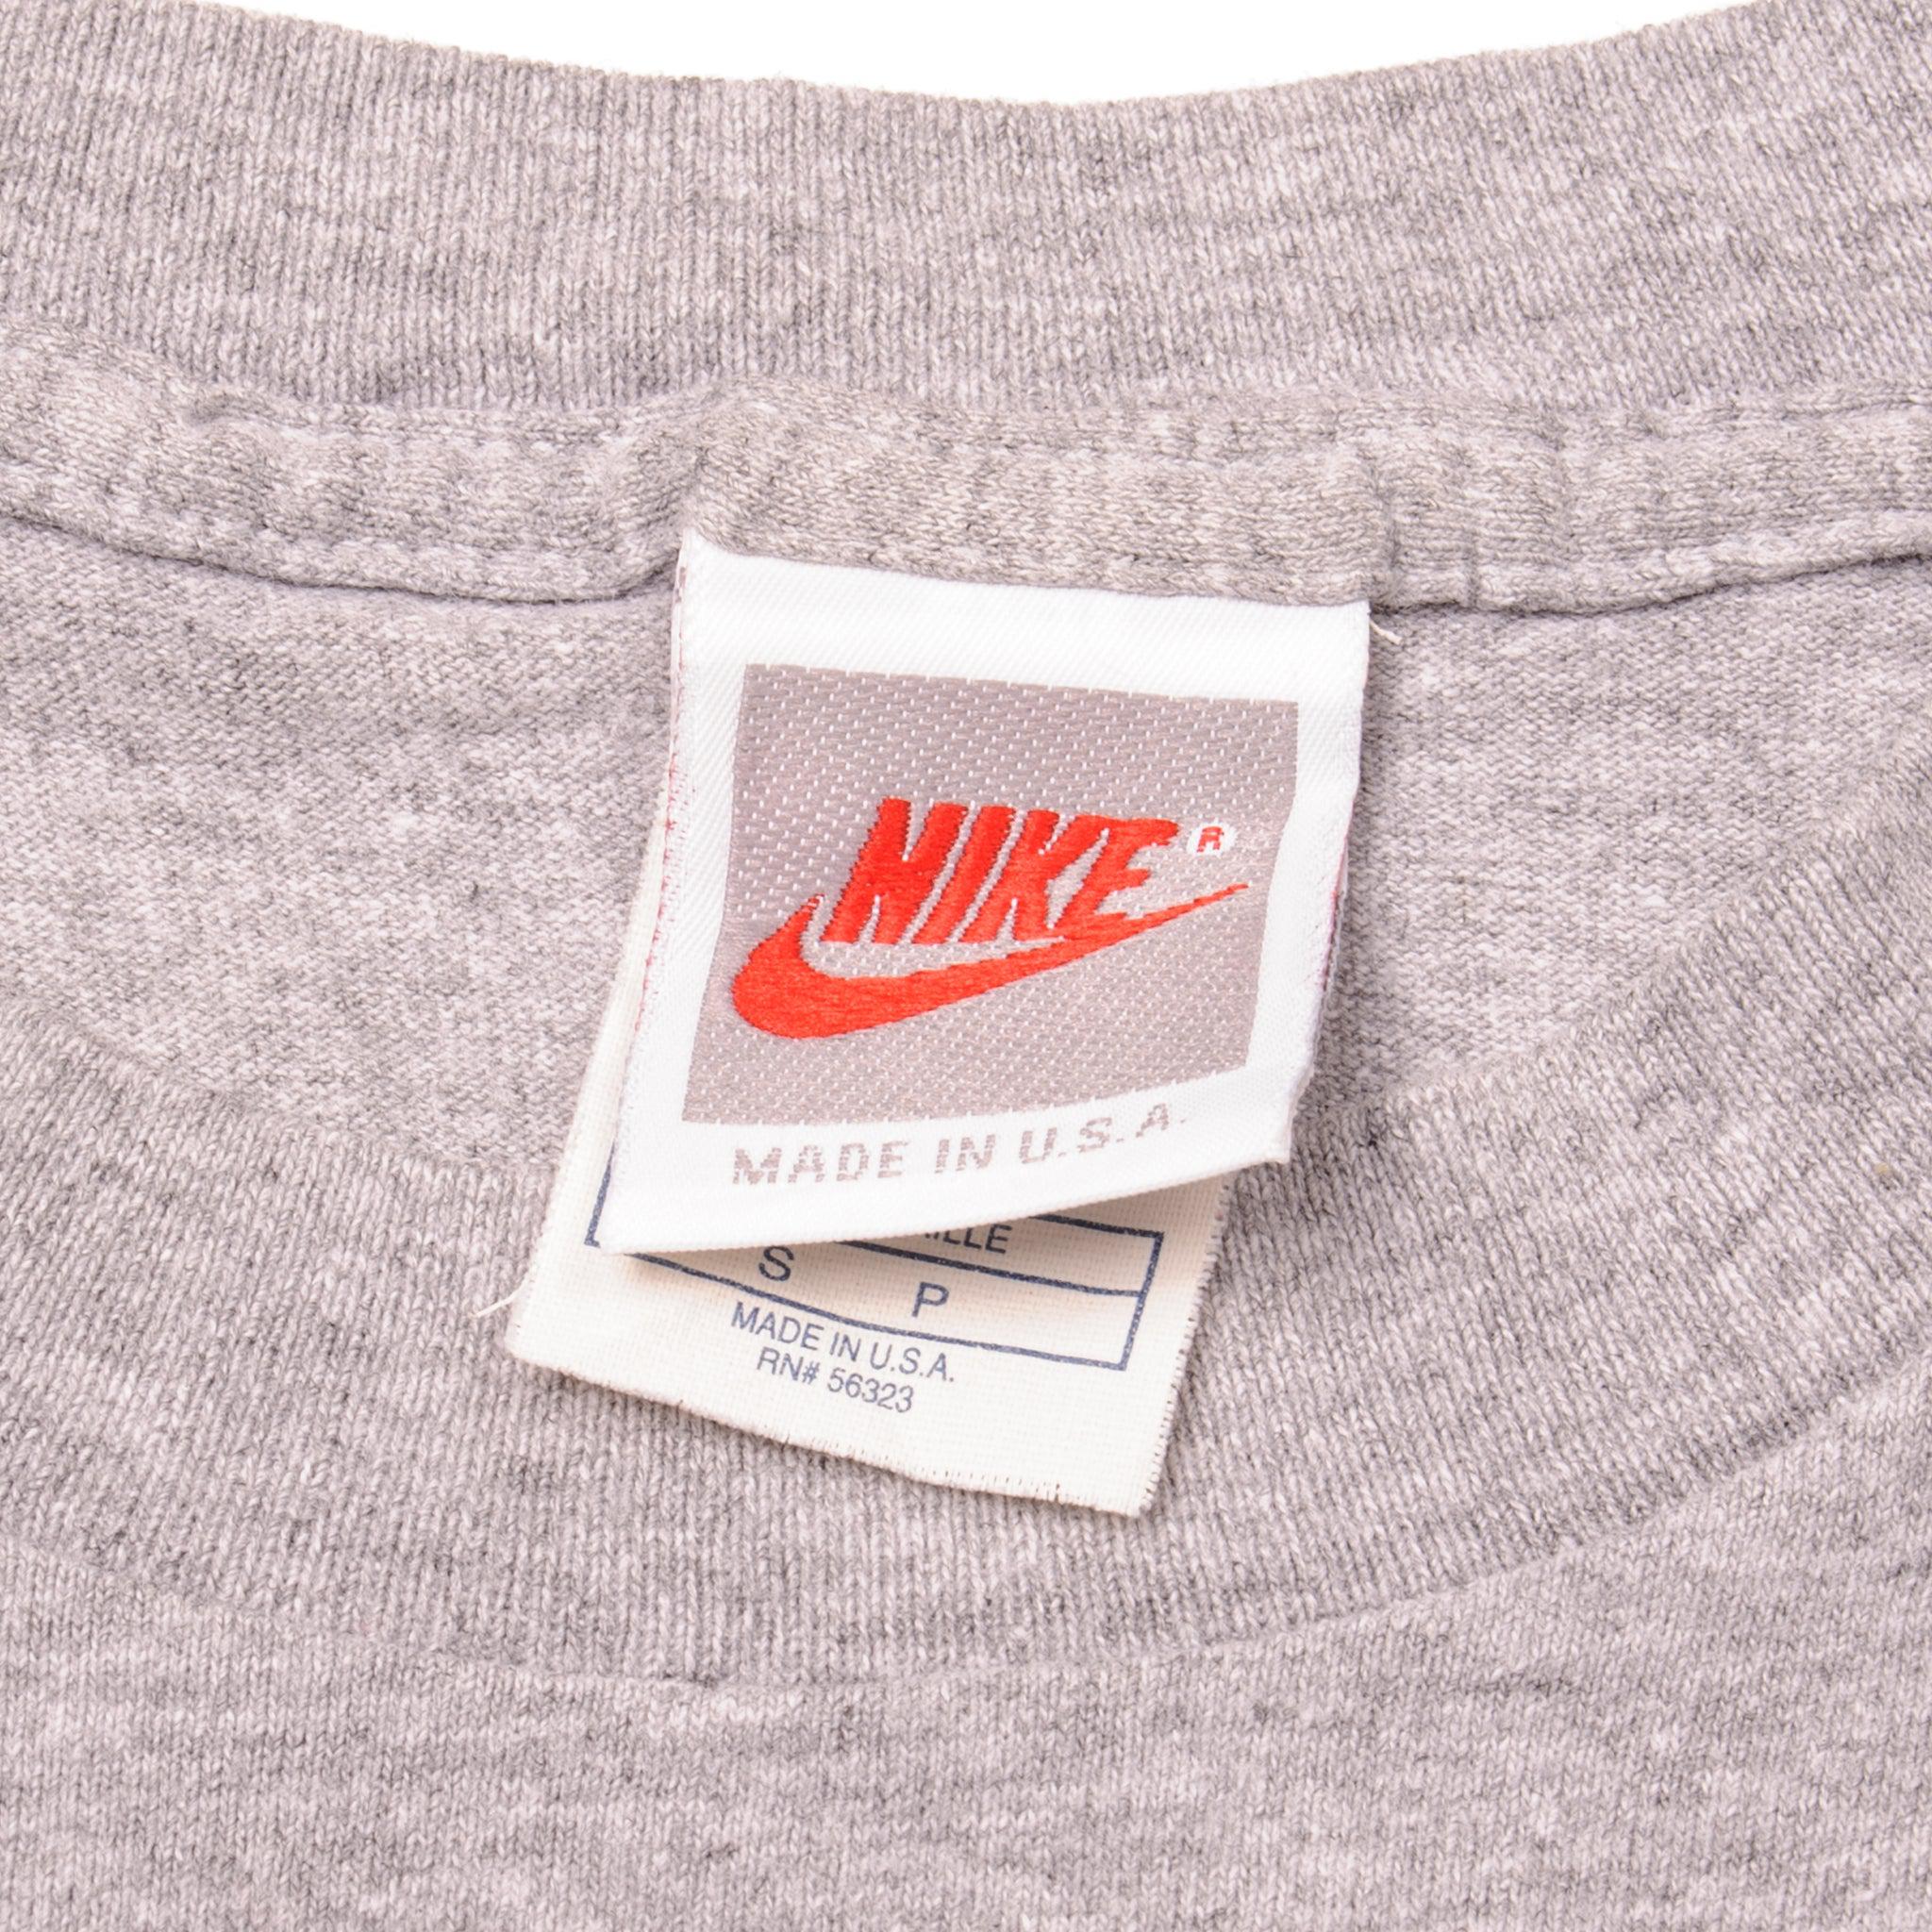 Vintage Nike Tee Shirt 80s 90s Size Medium Made in USA Swoosh